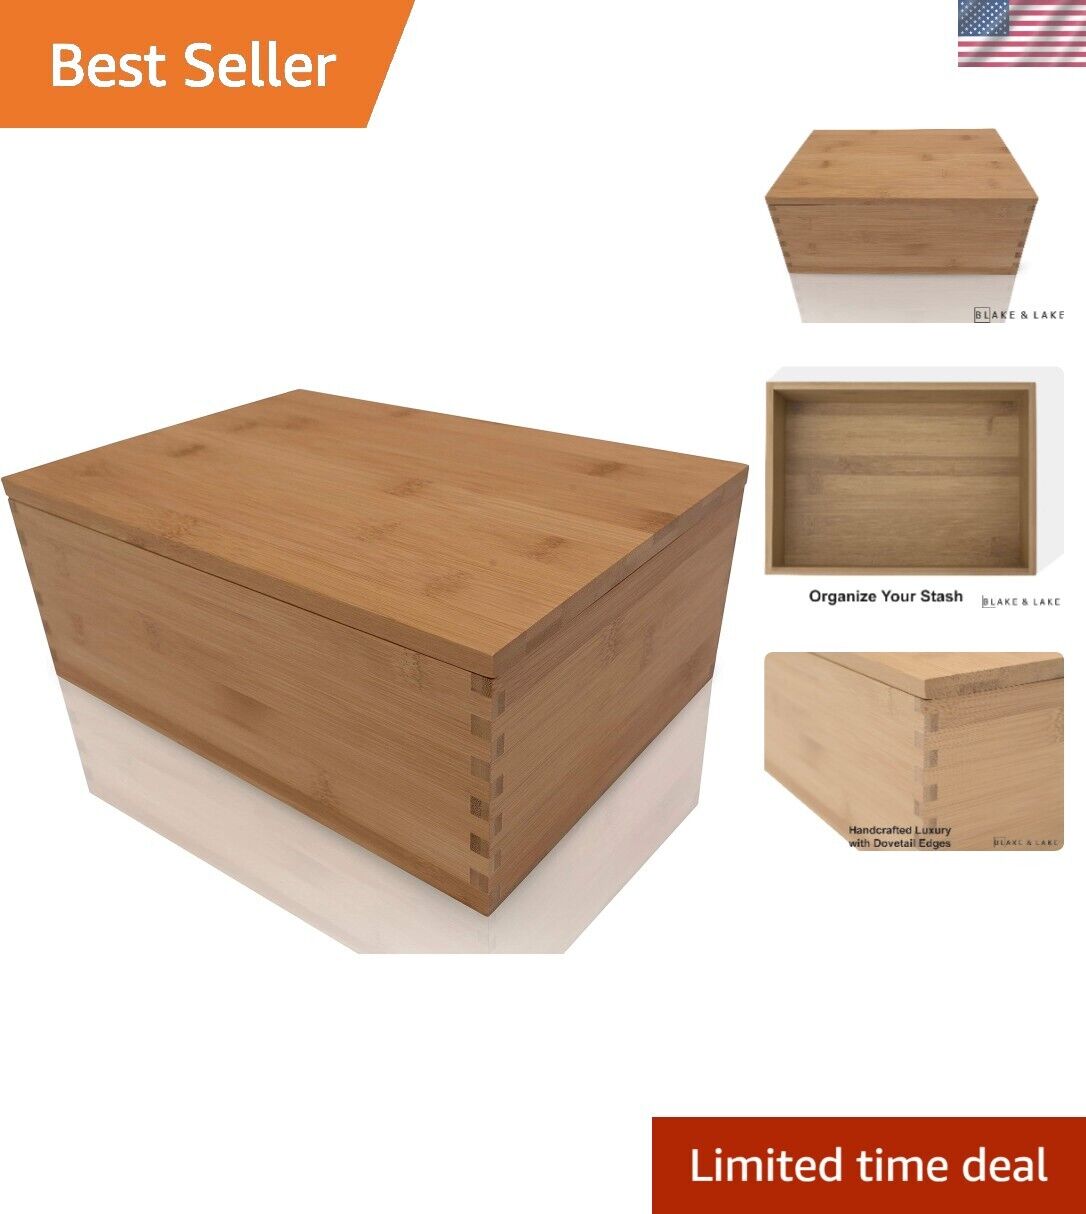 Large Wooden Keepsake Box with Dovetail Design - Stylish Gift Box and Organizer